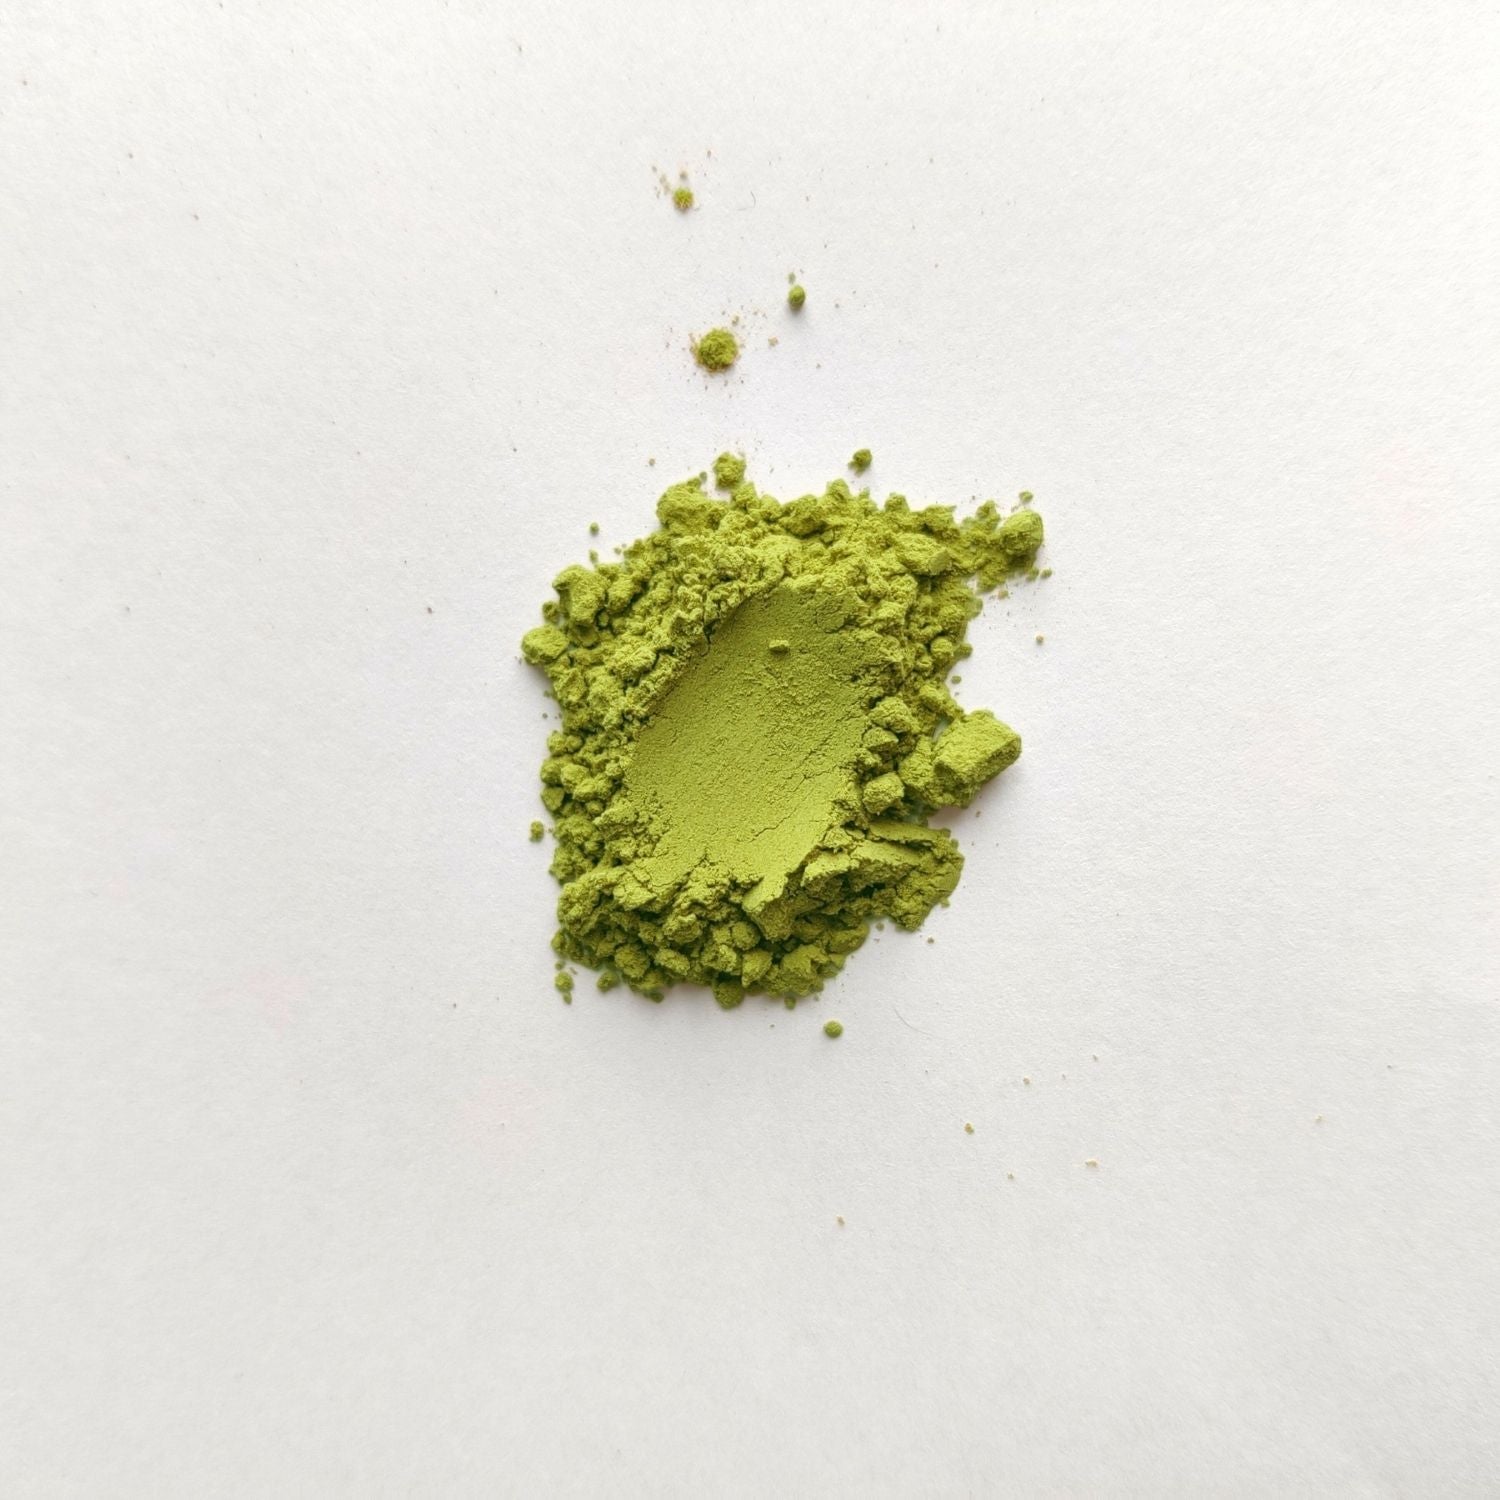 Genmaicha powder in green color.